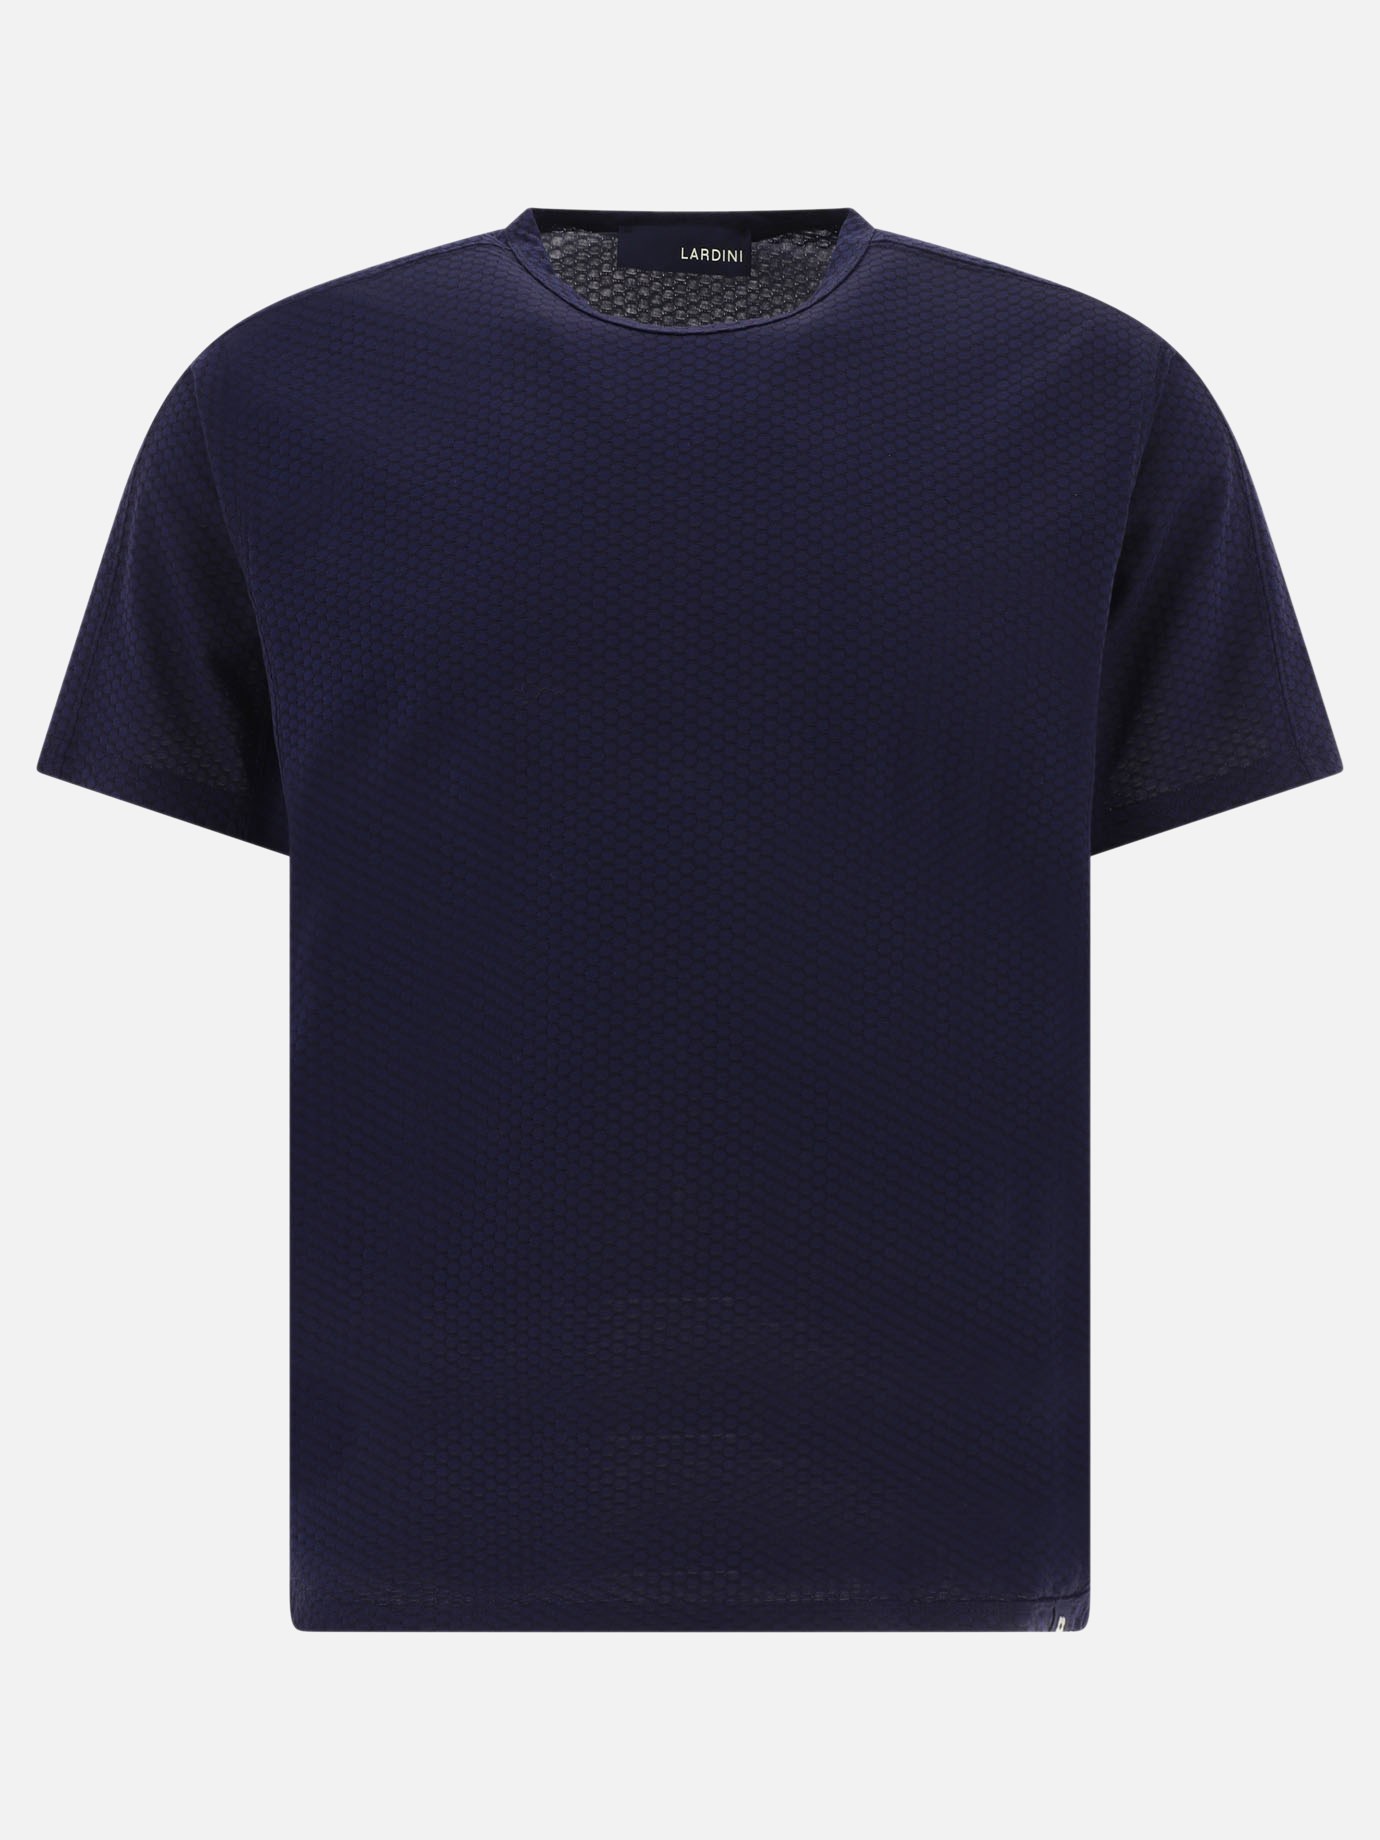 Honeycomb t-shirtby Lardini - 5